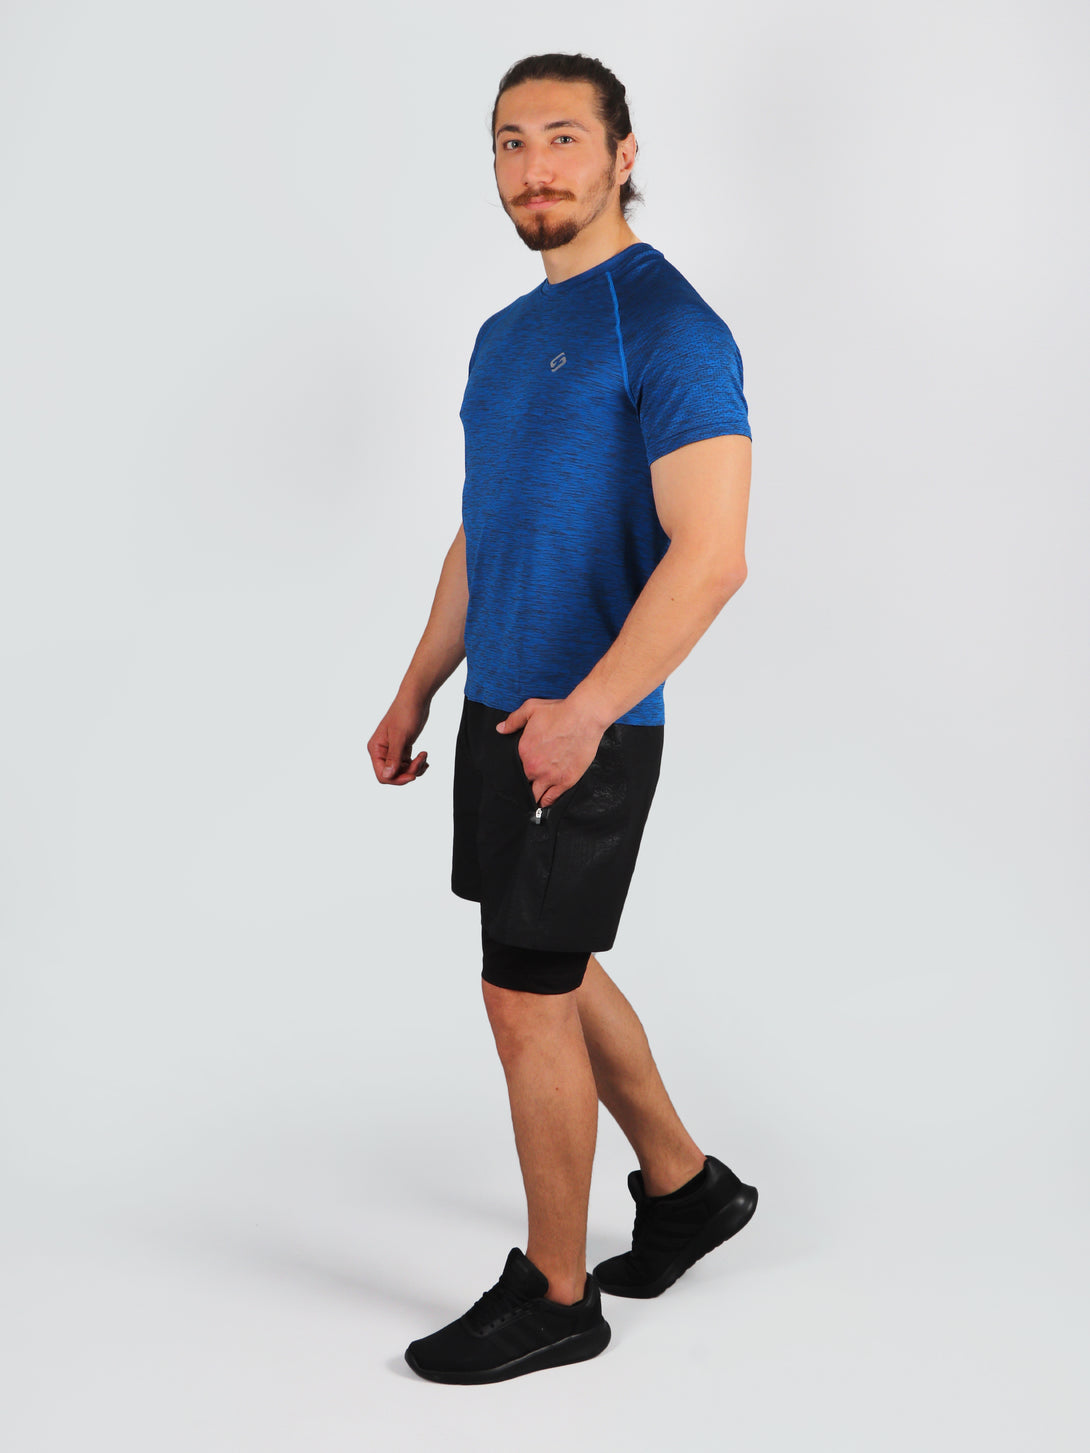 A Man Wearing Lapis Blue Color Seamless Workout Comfort T-Shirt